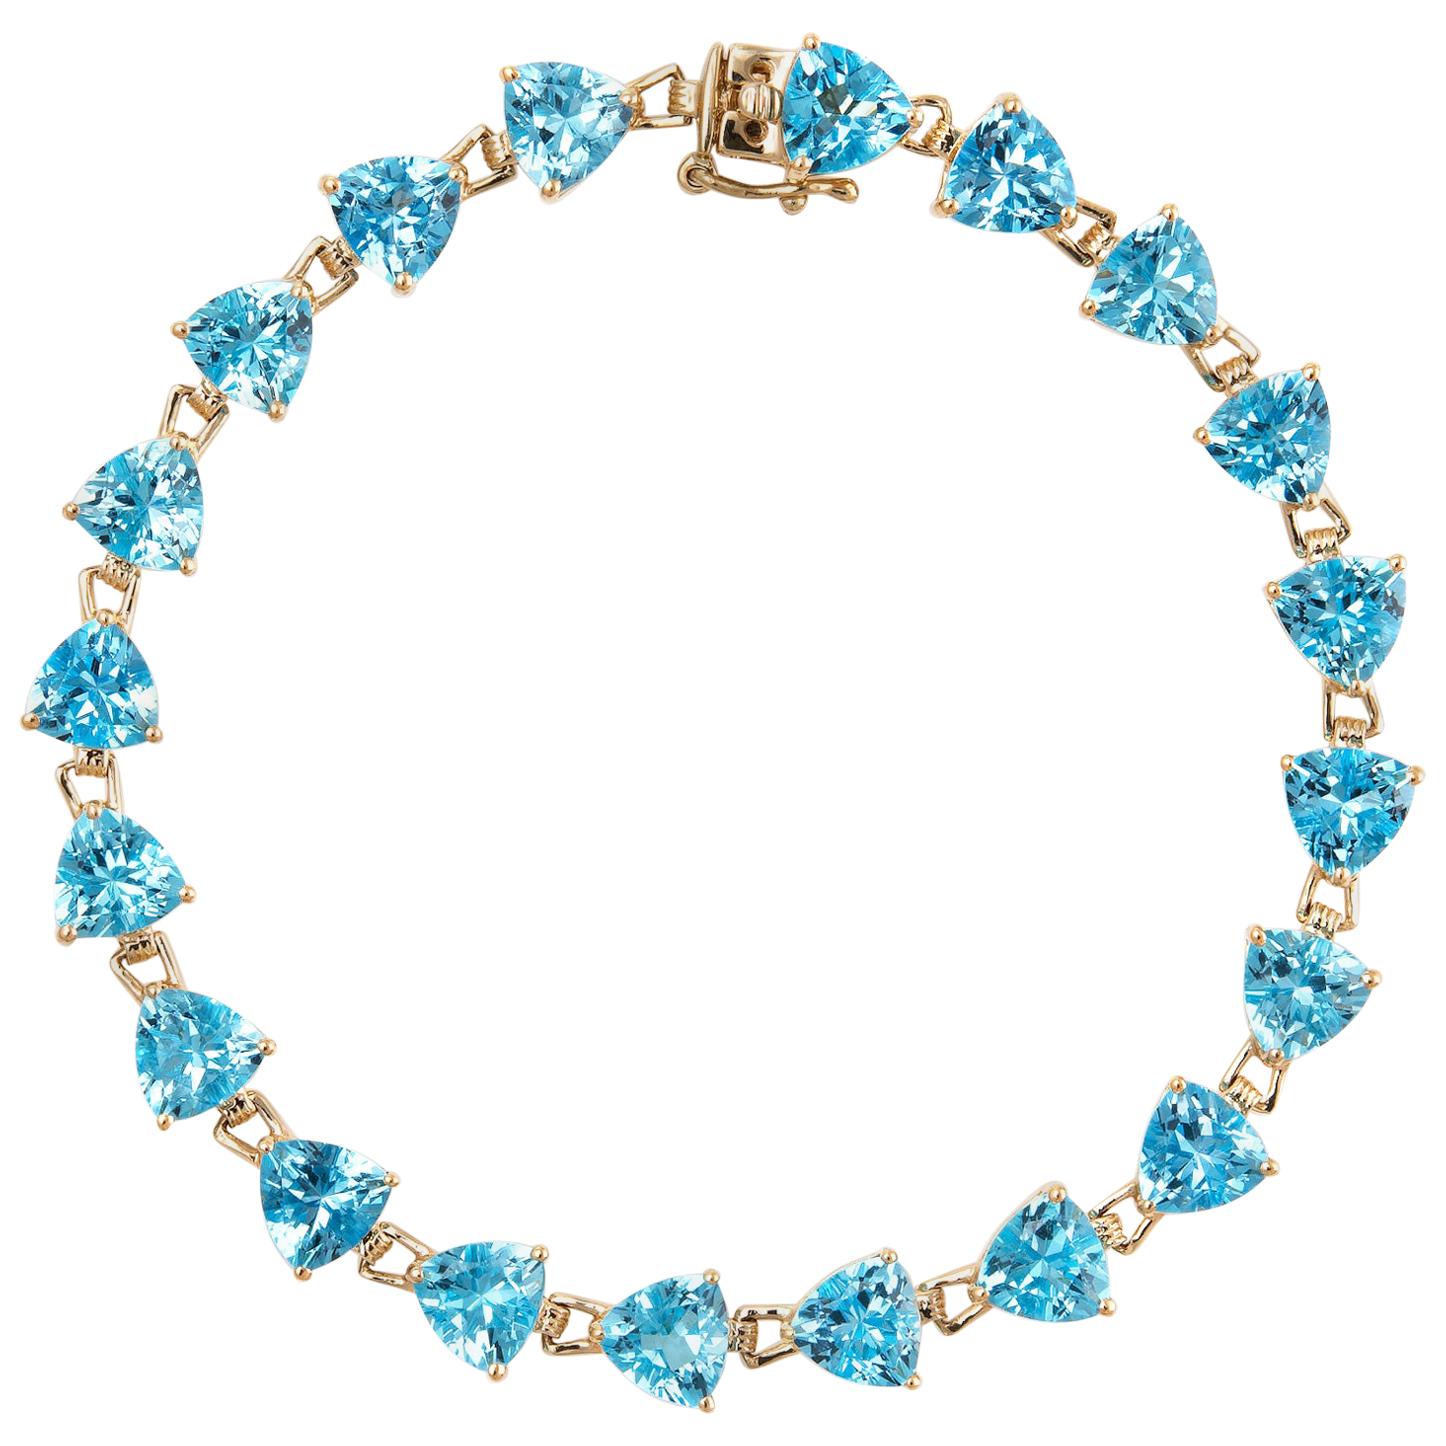 16 Carat Blue Topaz Bracelet Tennis Line Estate 14K Gold Trillion Cut Jewelry